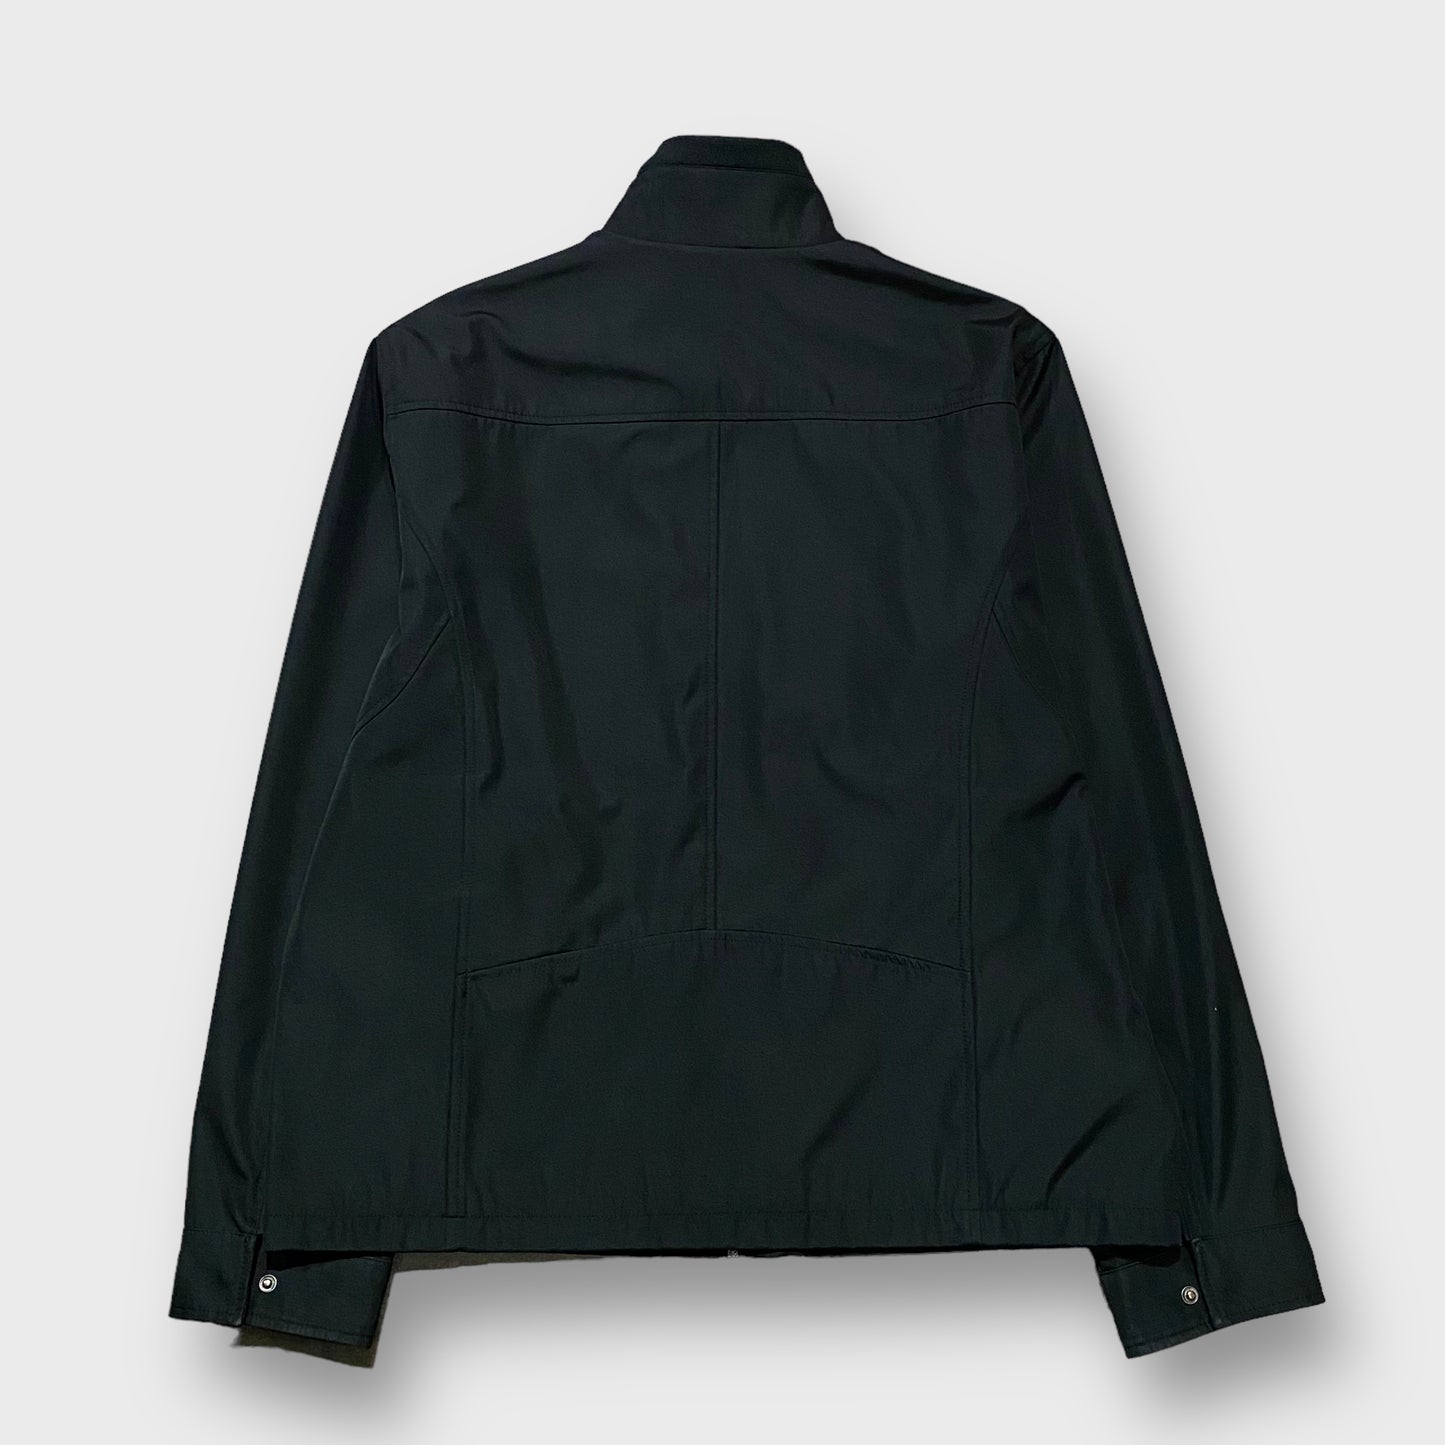 "Calvin Klein" High-neck jacket